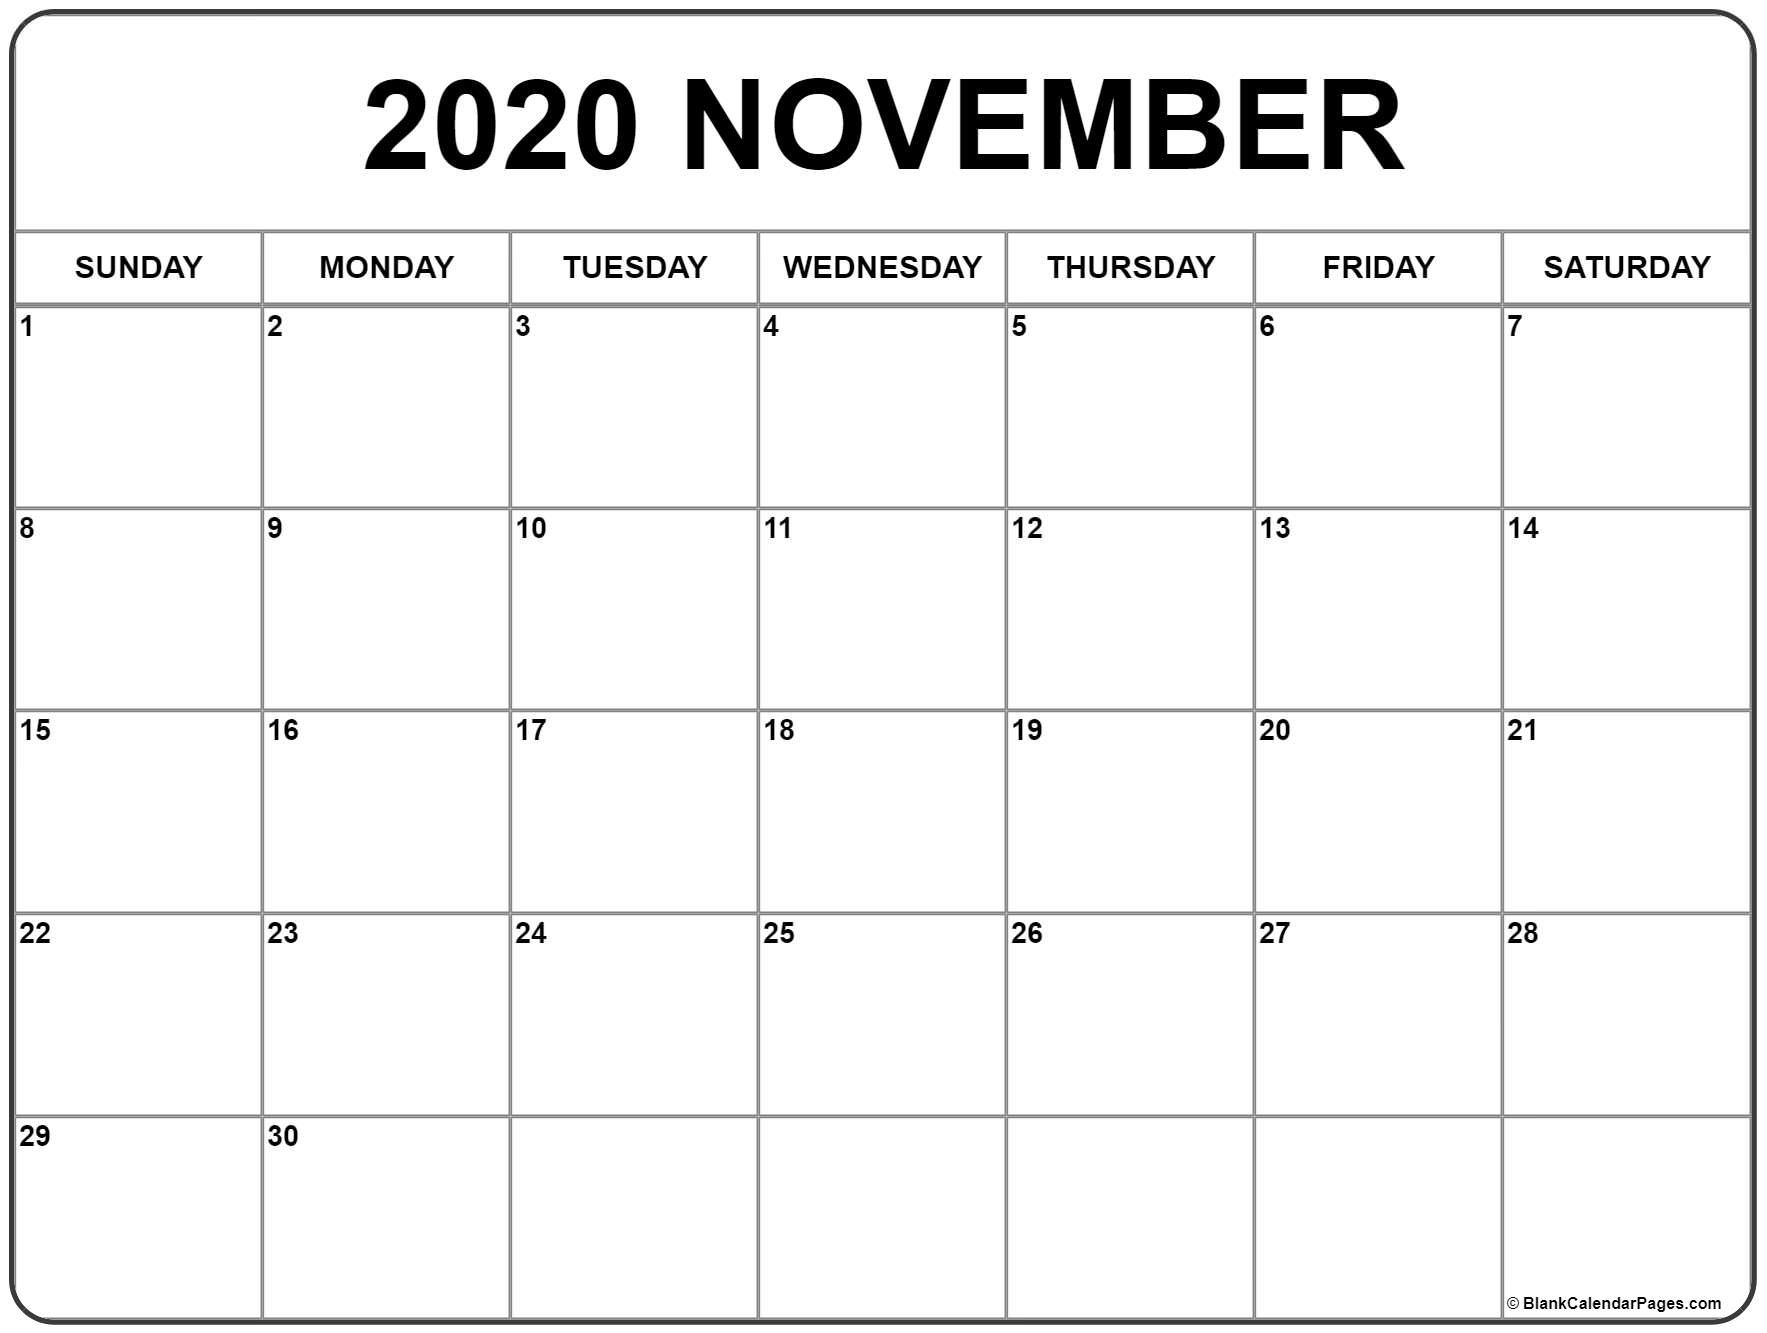 November 2020 Calendar | Free Printable Monthly Calendars